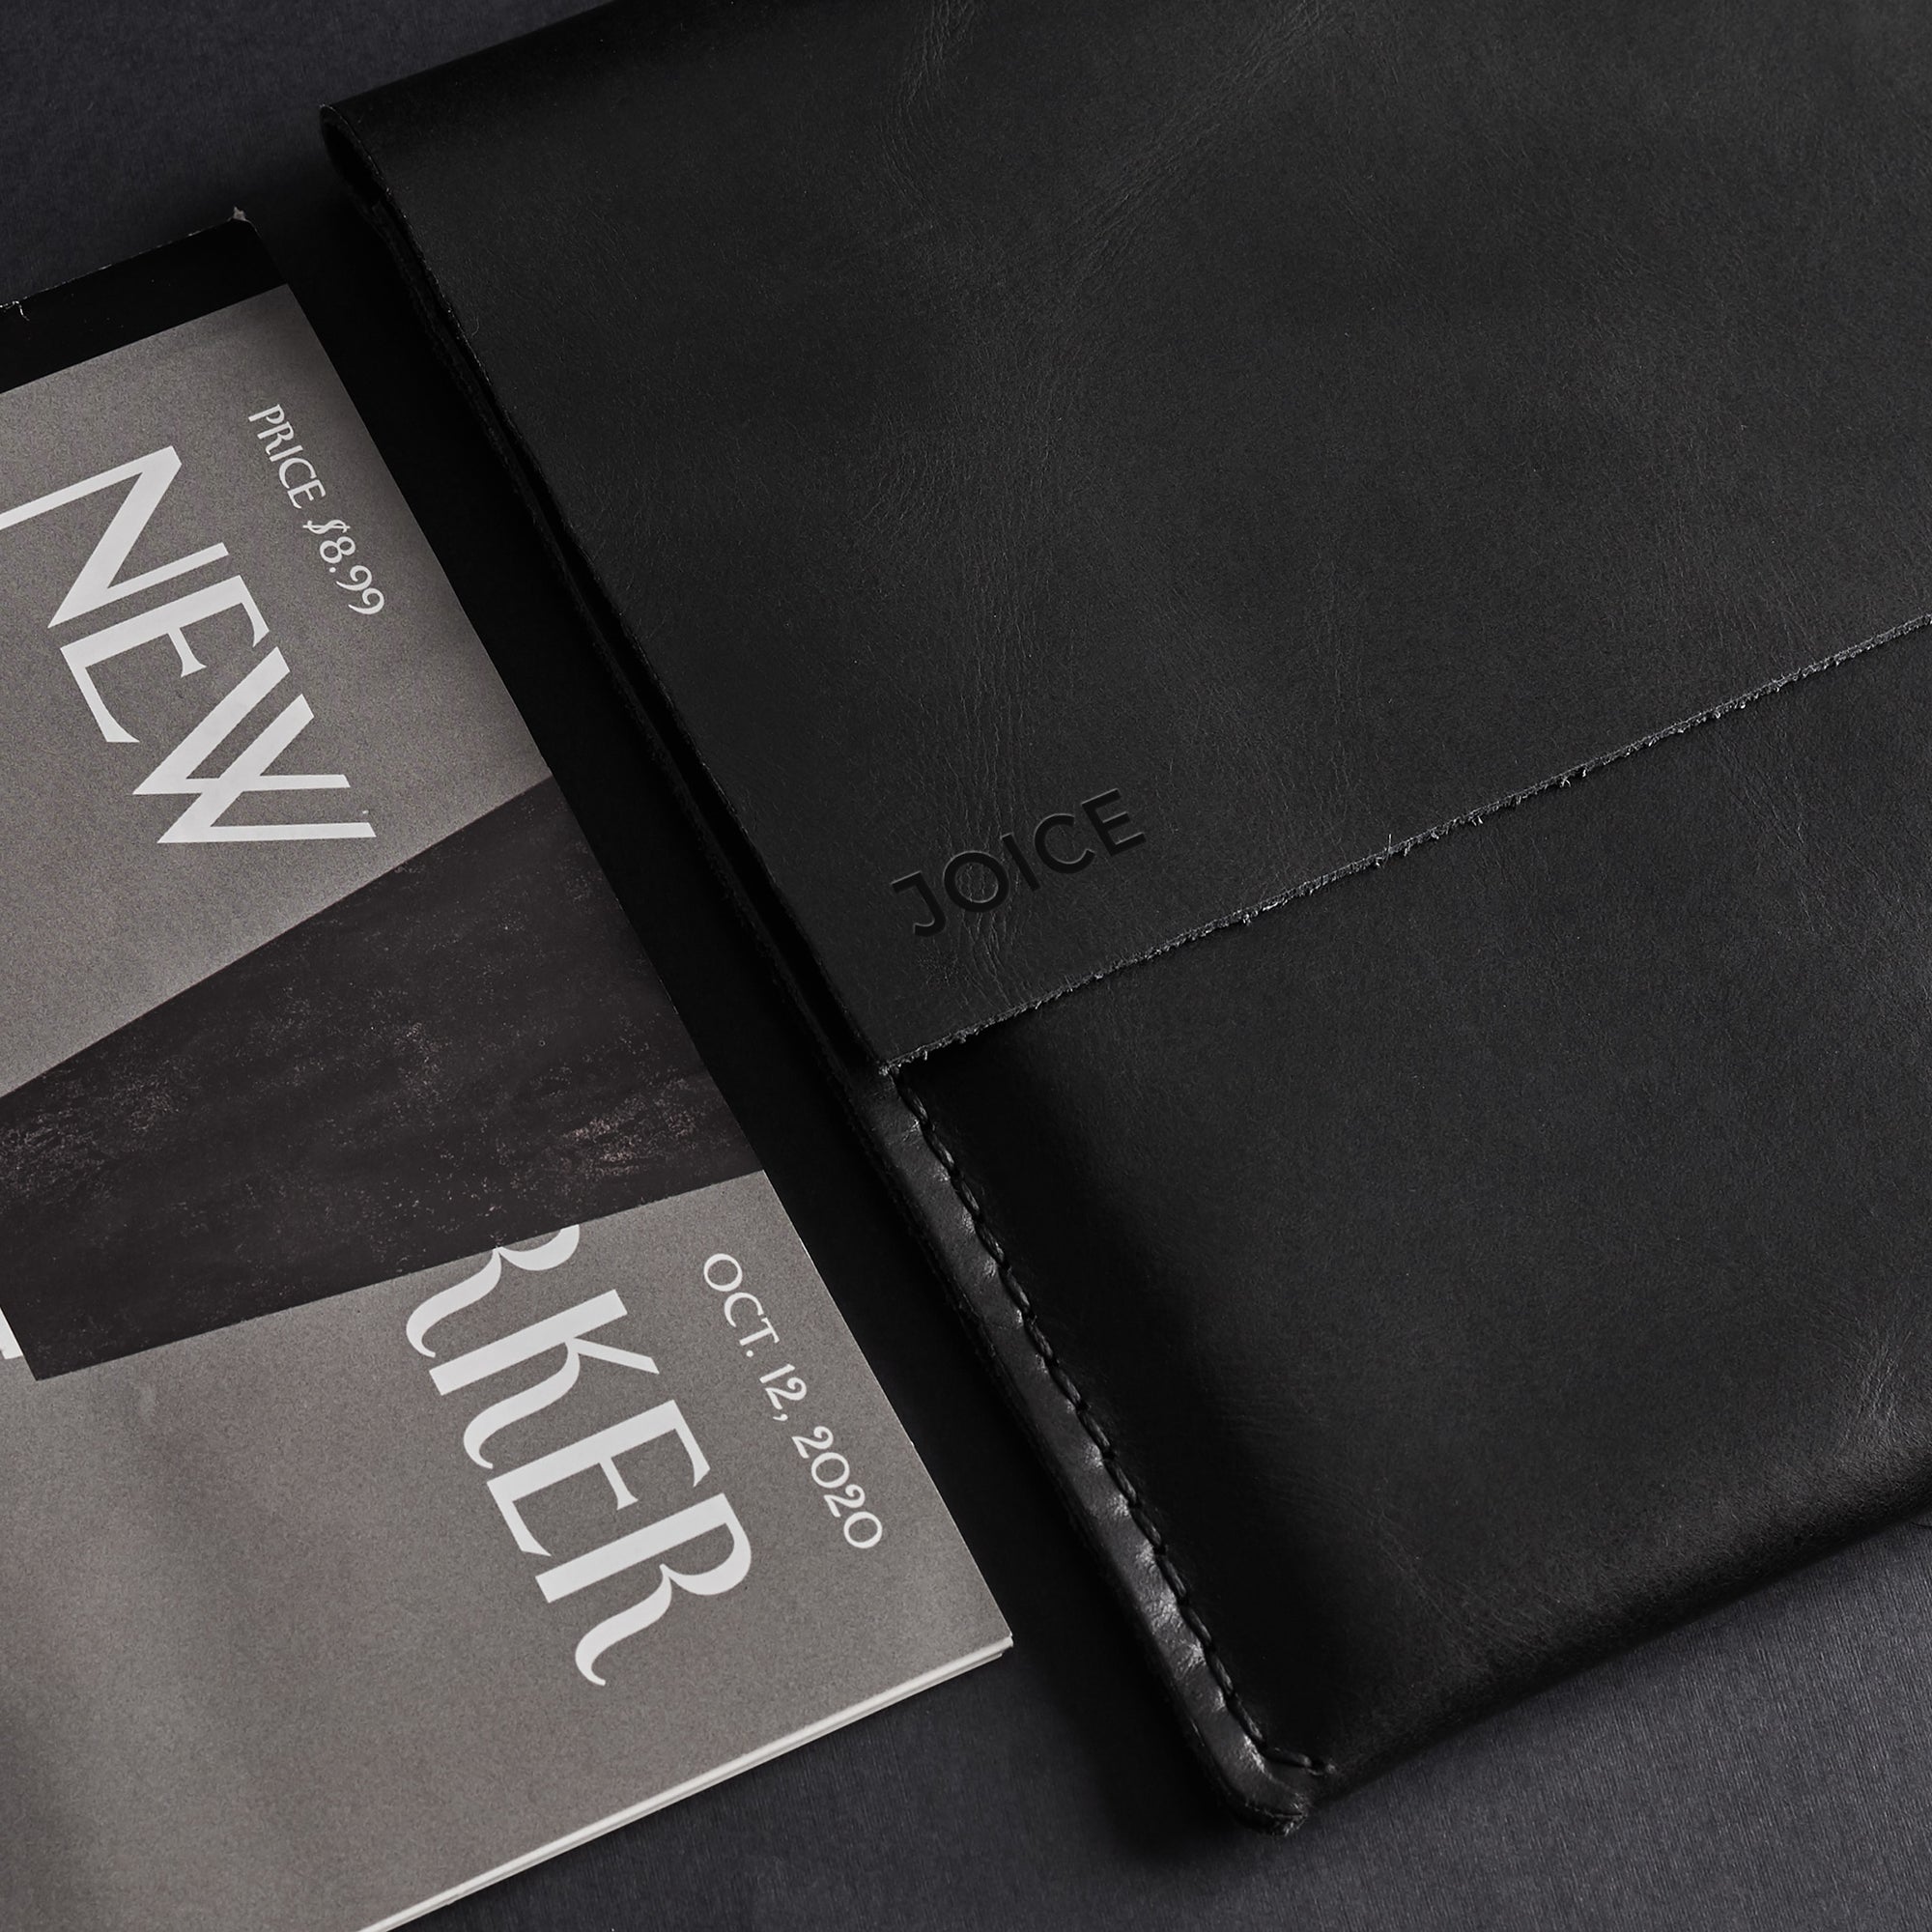 Custom engraving. Black Leather Minial iPad Sleeve Case by Capra Leather